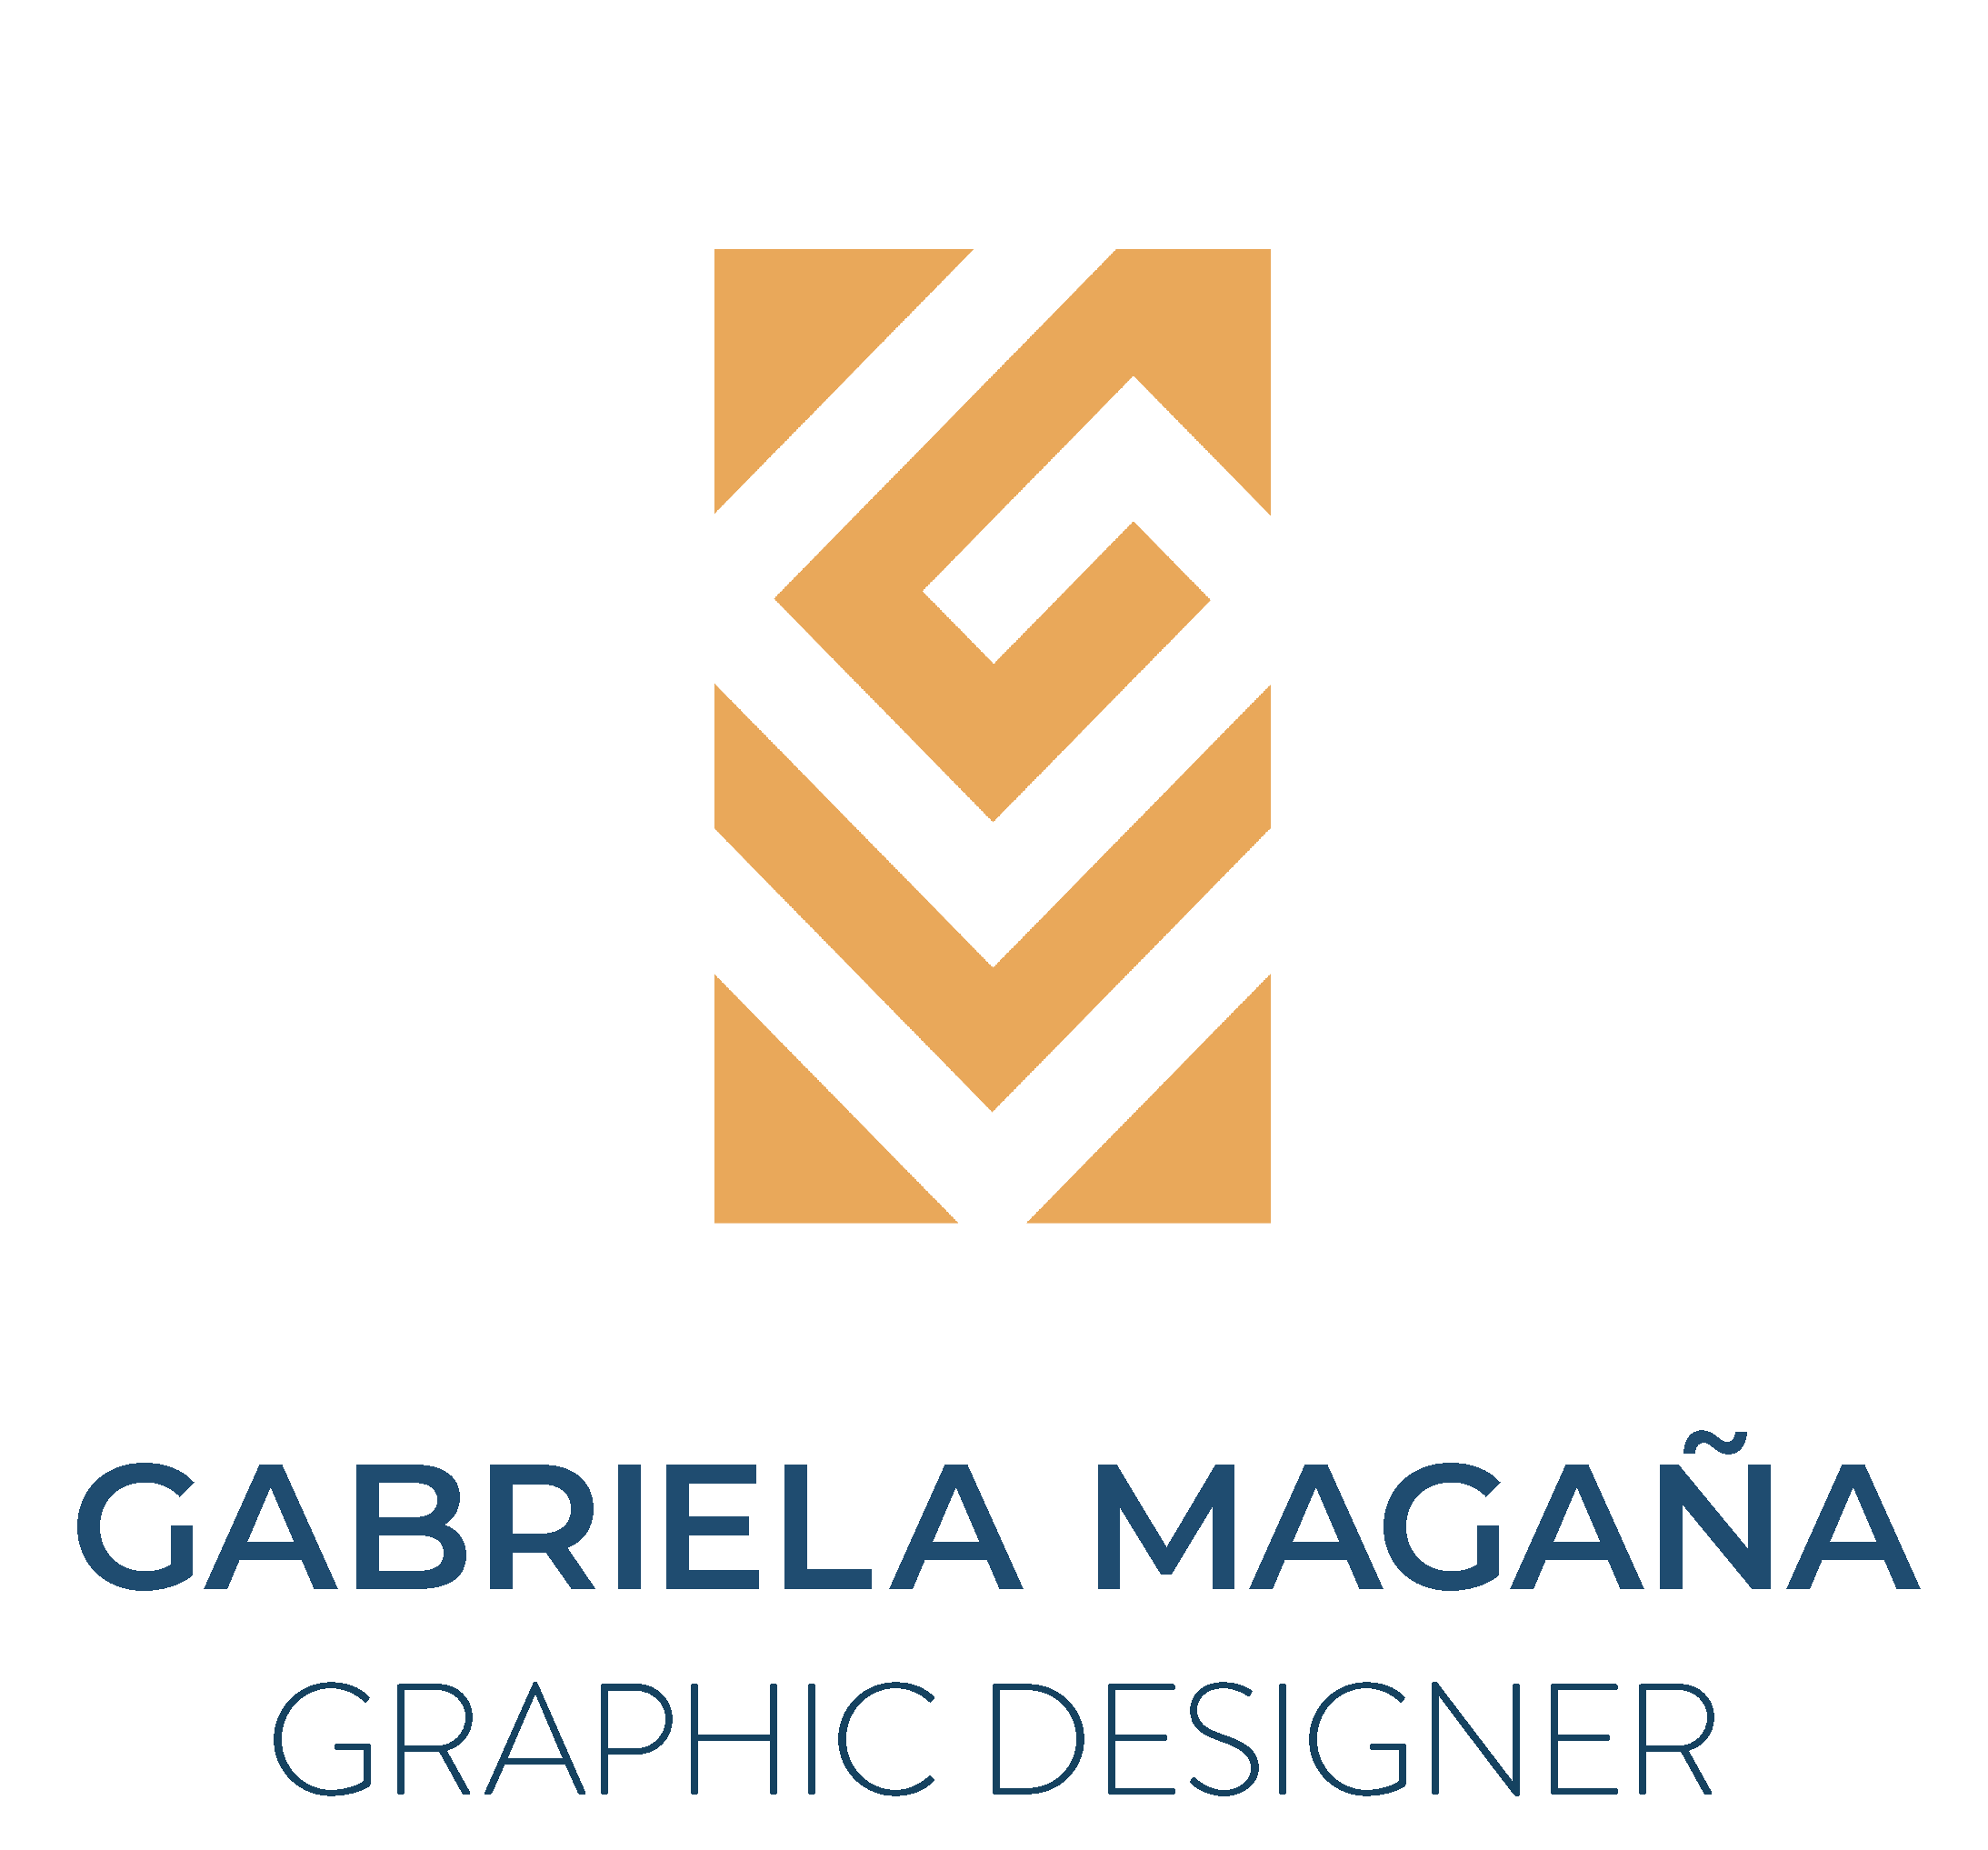 Gabriela Magana